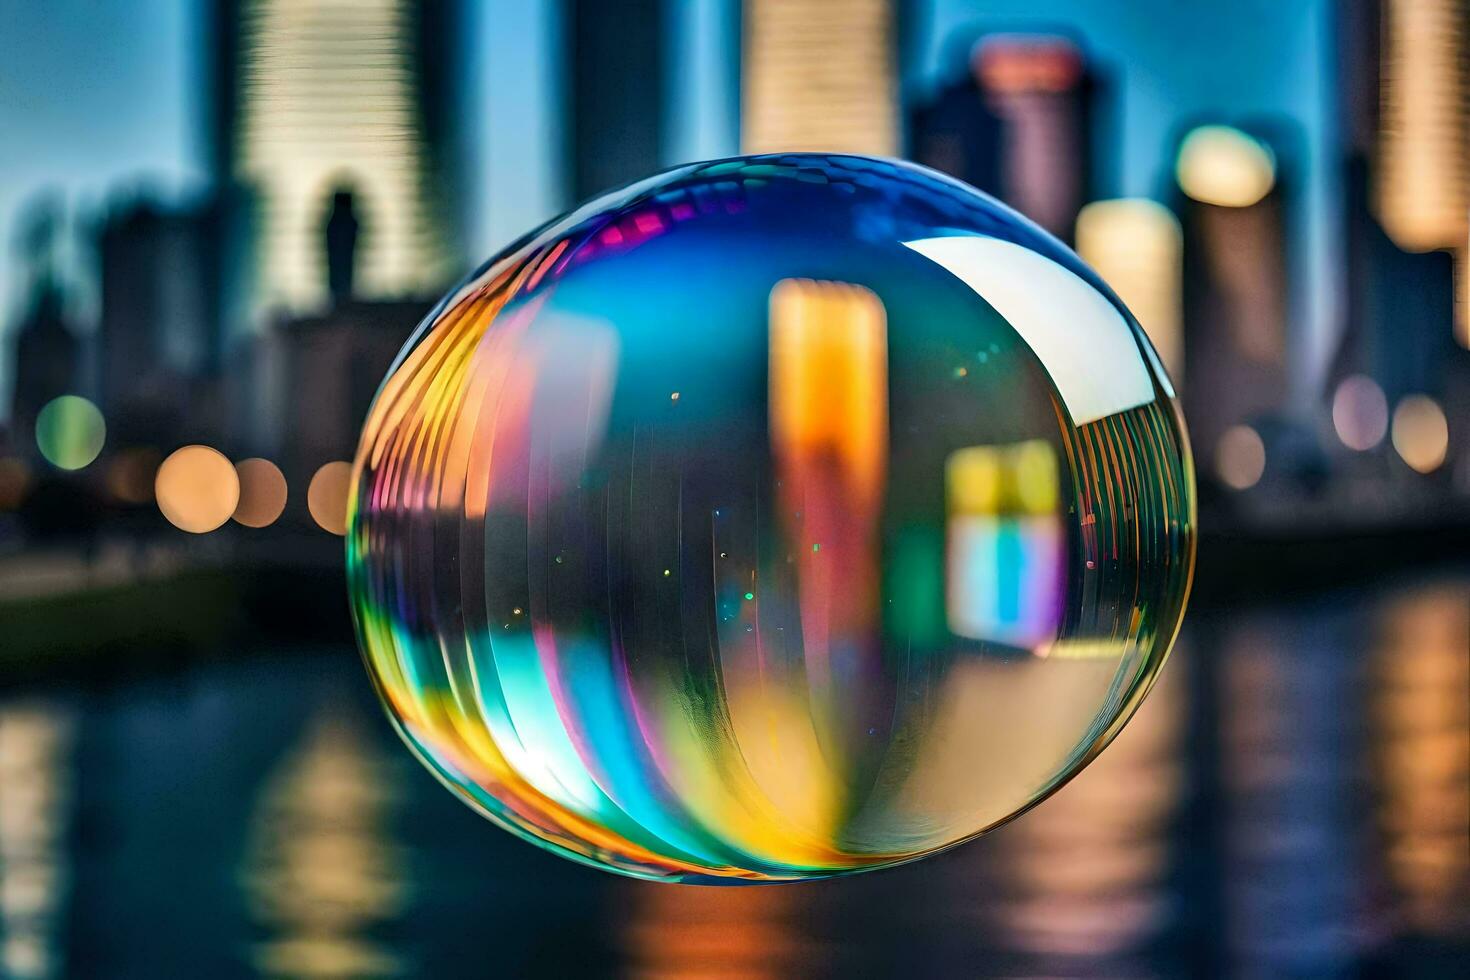 ai genererad en bubbla med en stad horisont i de bakgrund foto